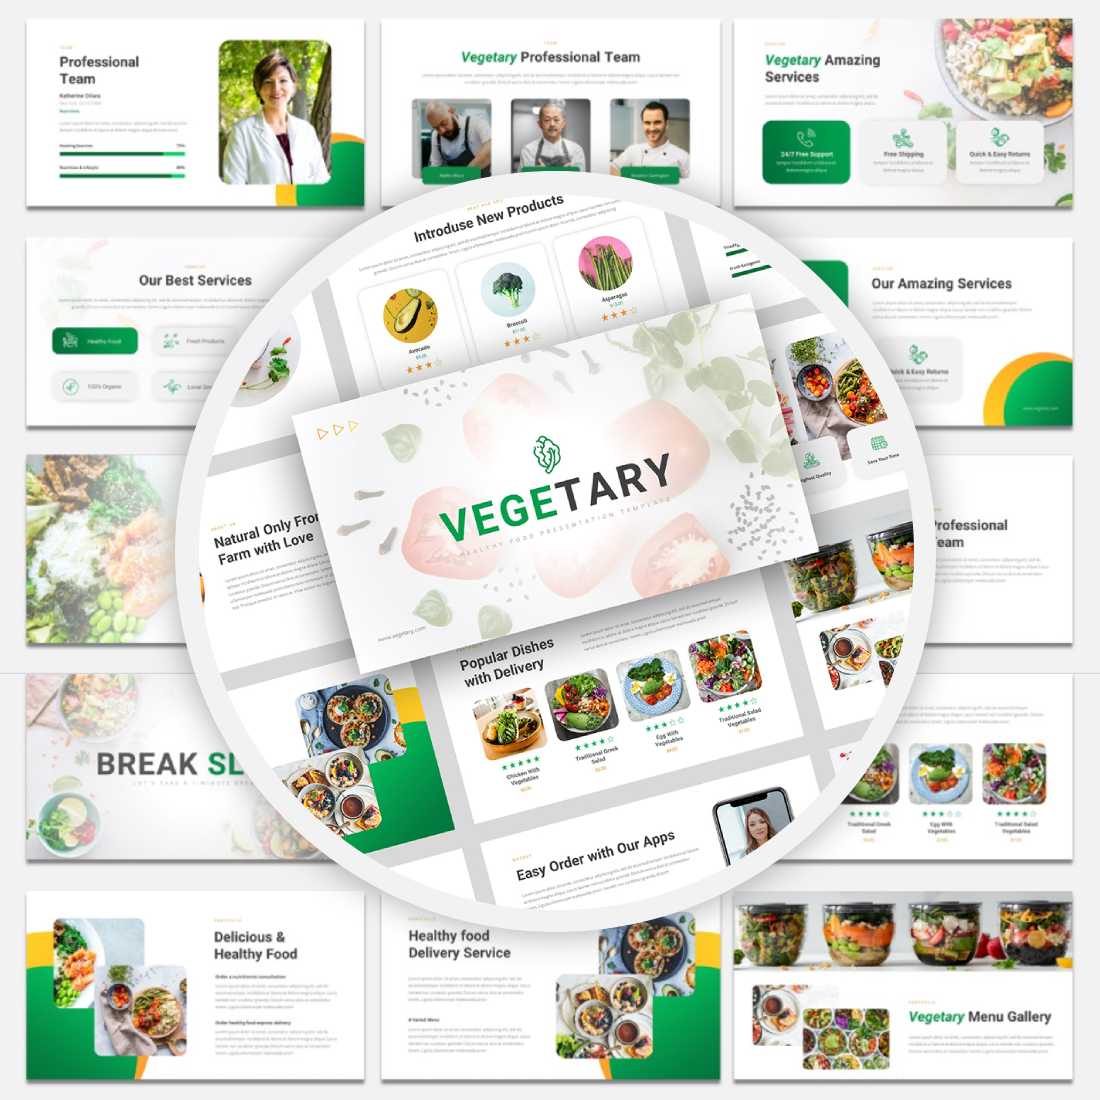 Vegetary - Healthy Food Presentation Google Slides Template cover image.